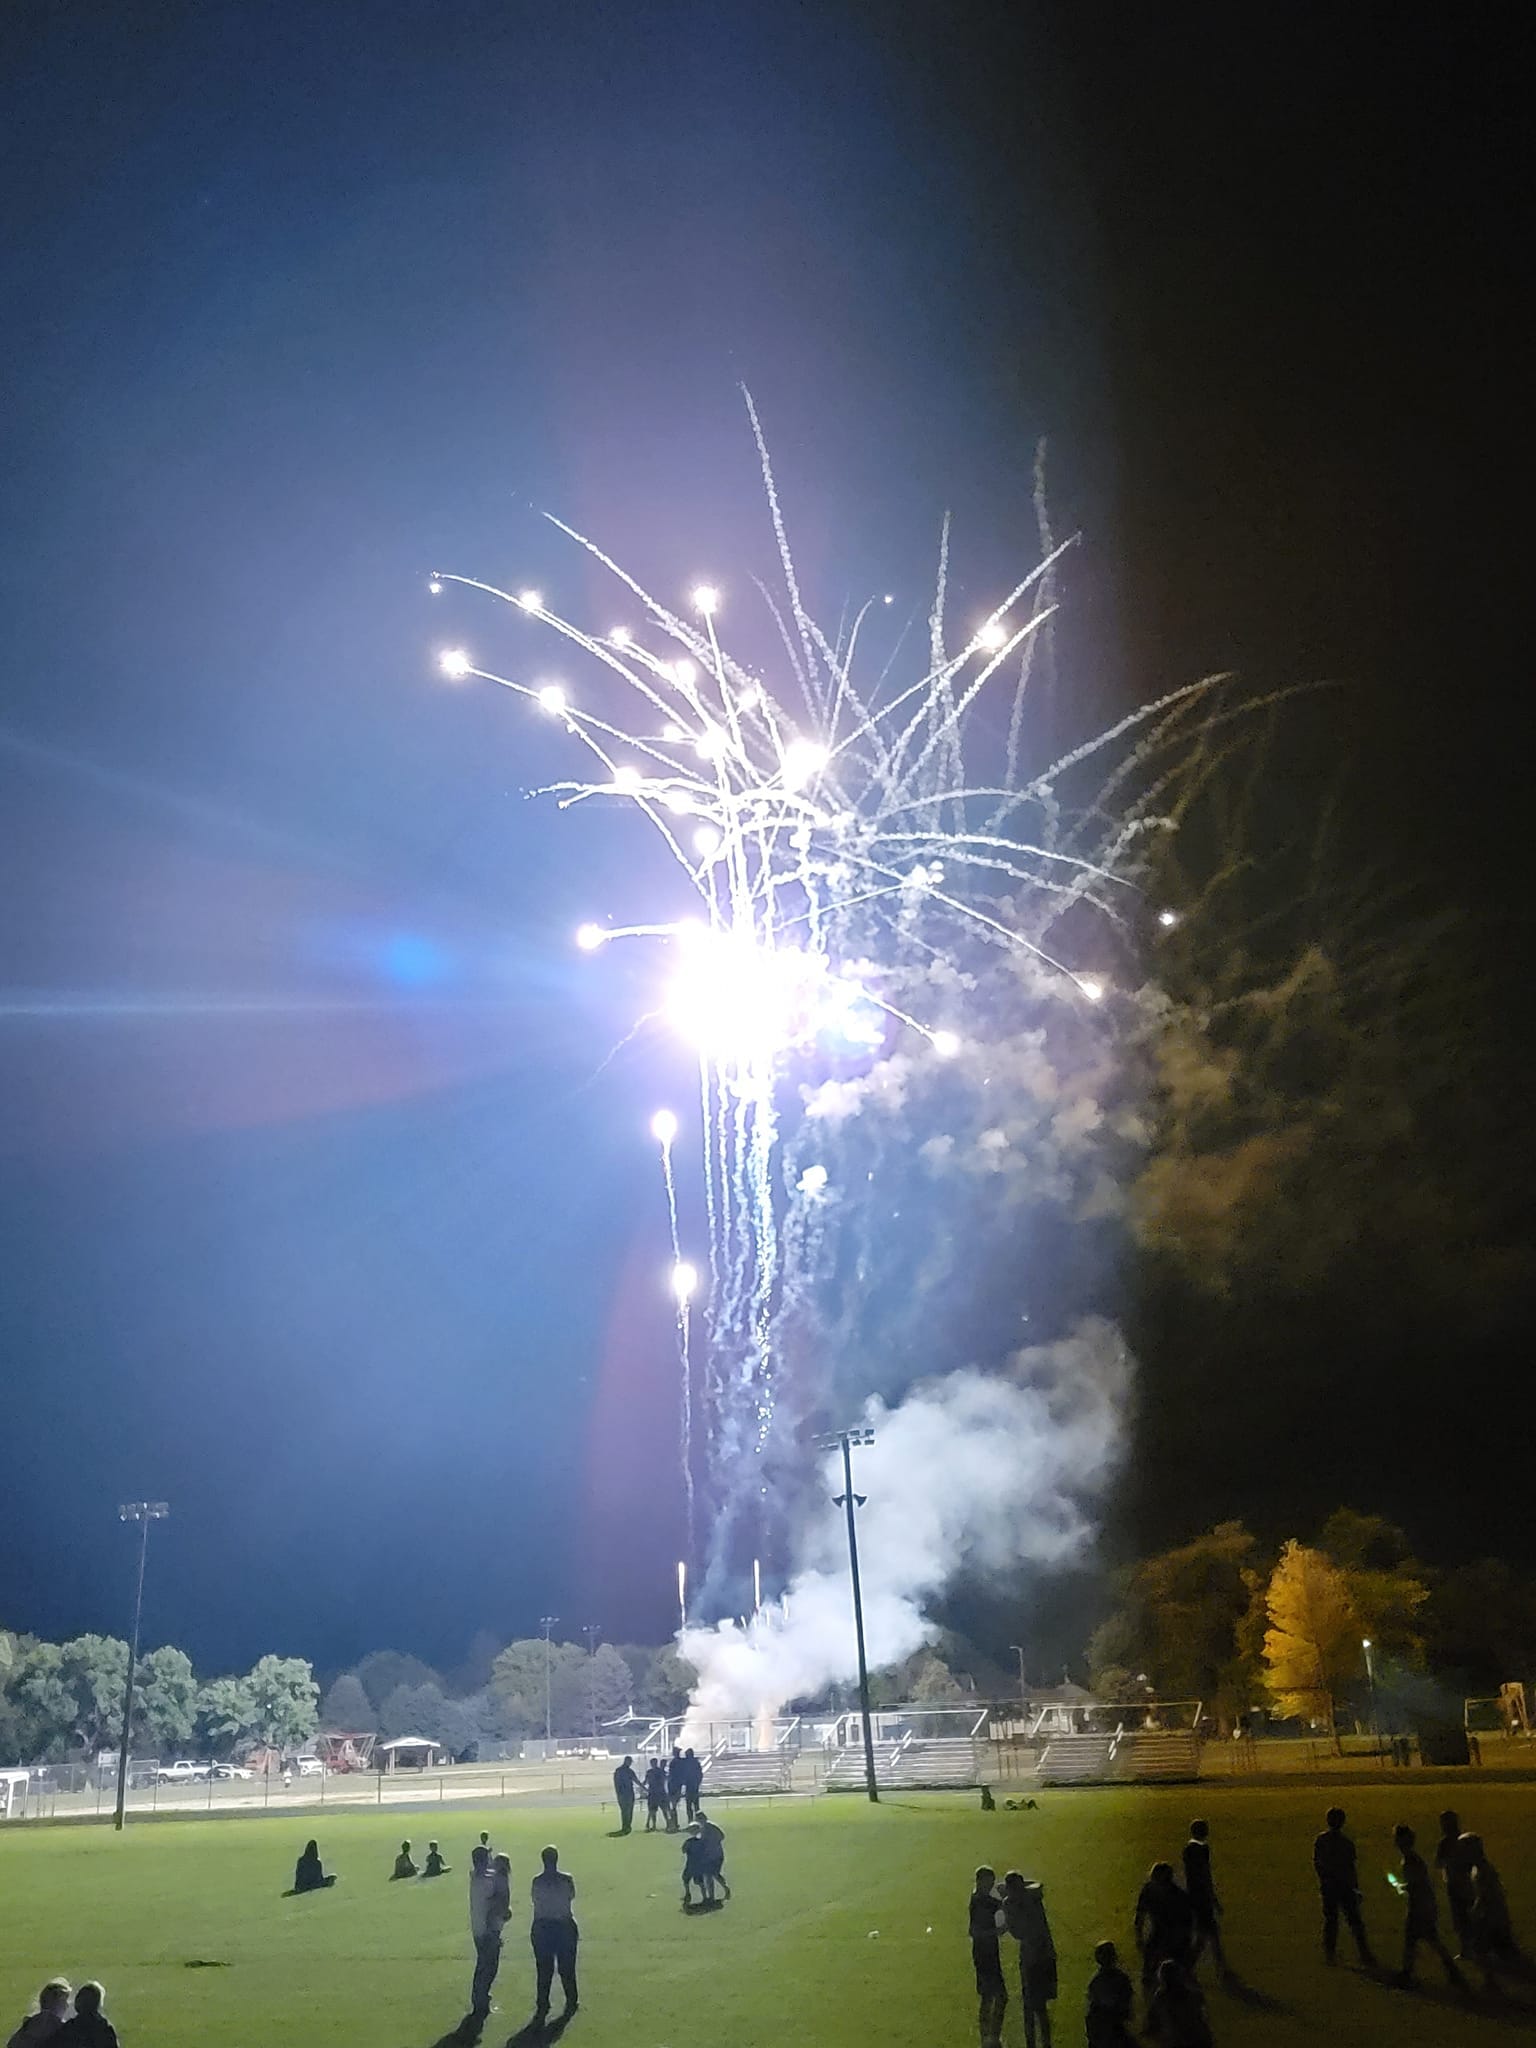 elm creek nebraska buffalo stampede fireworks show at night